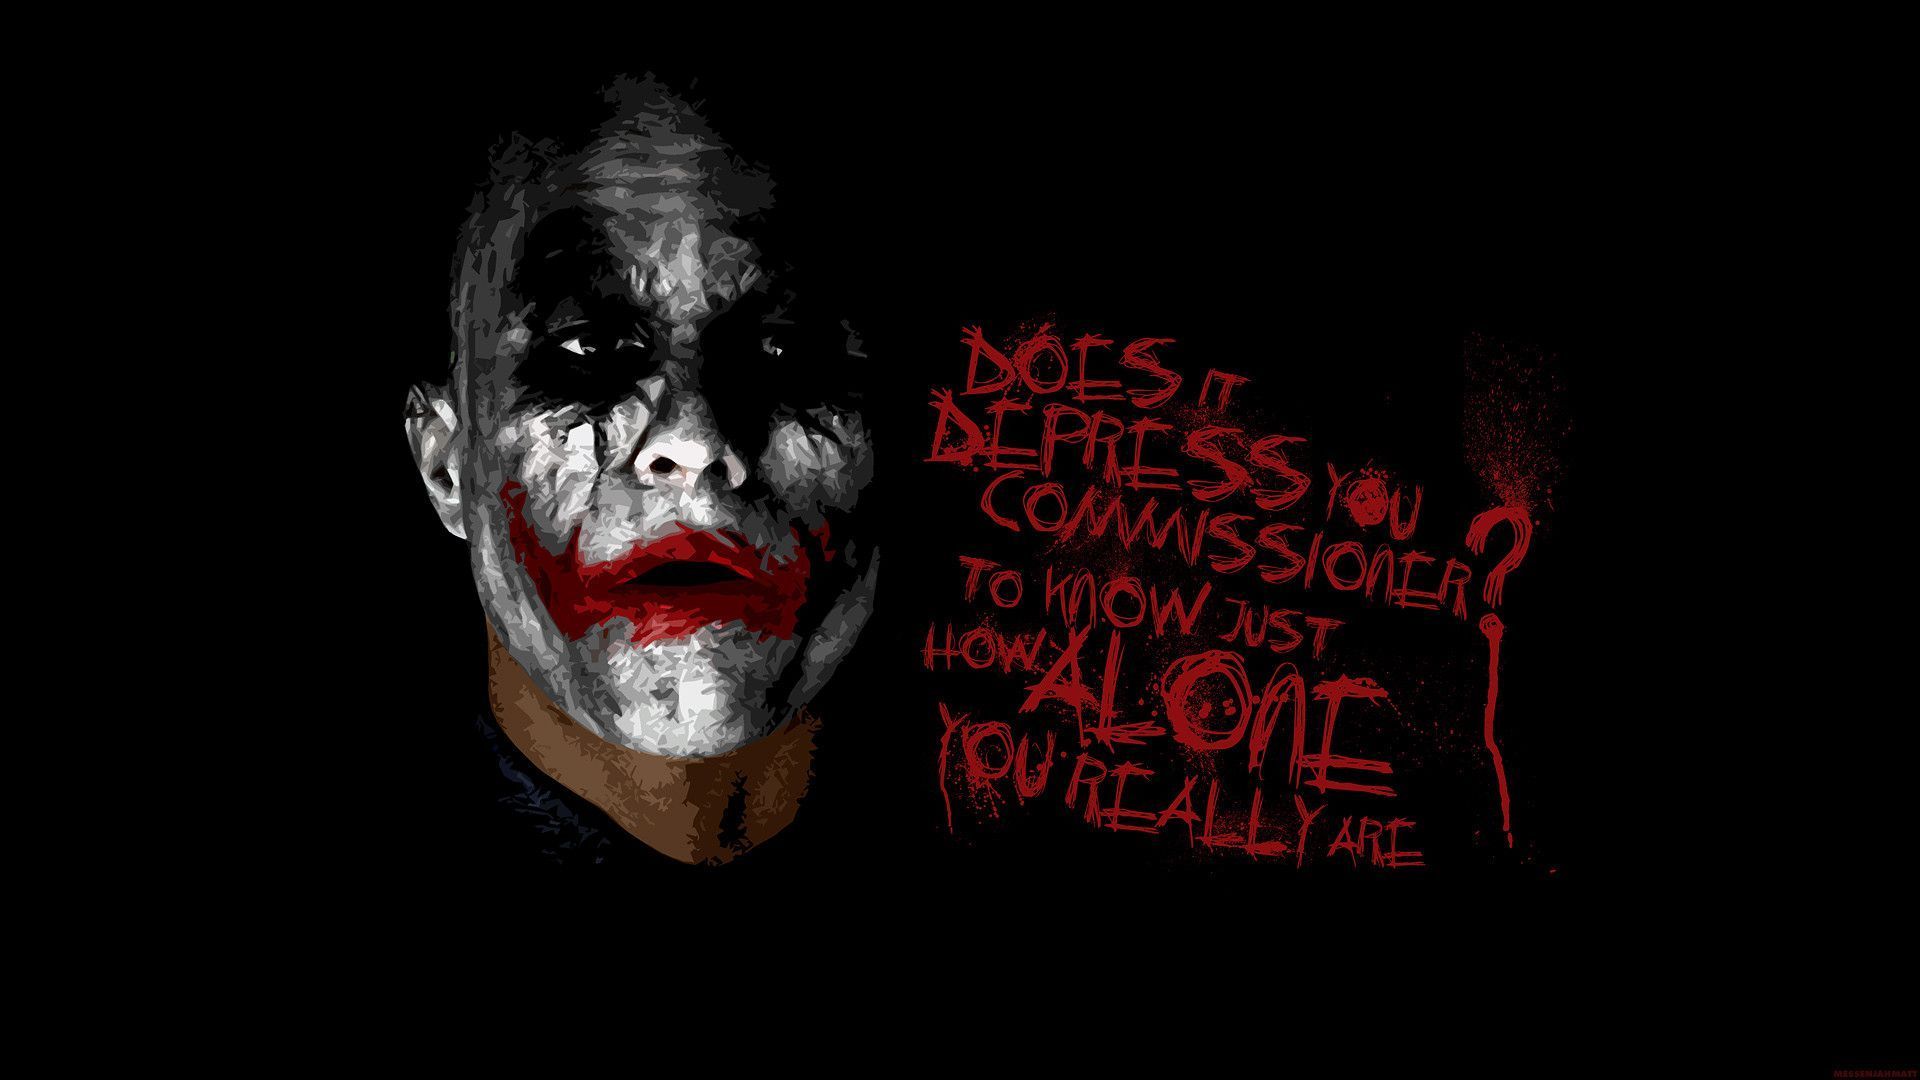 HD Joker Cool Wallpaper Batman Movie Tz